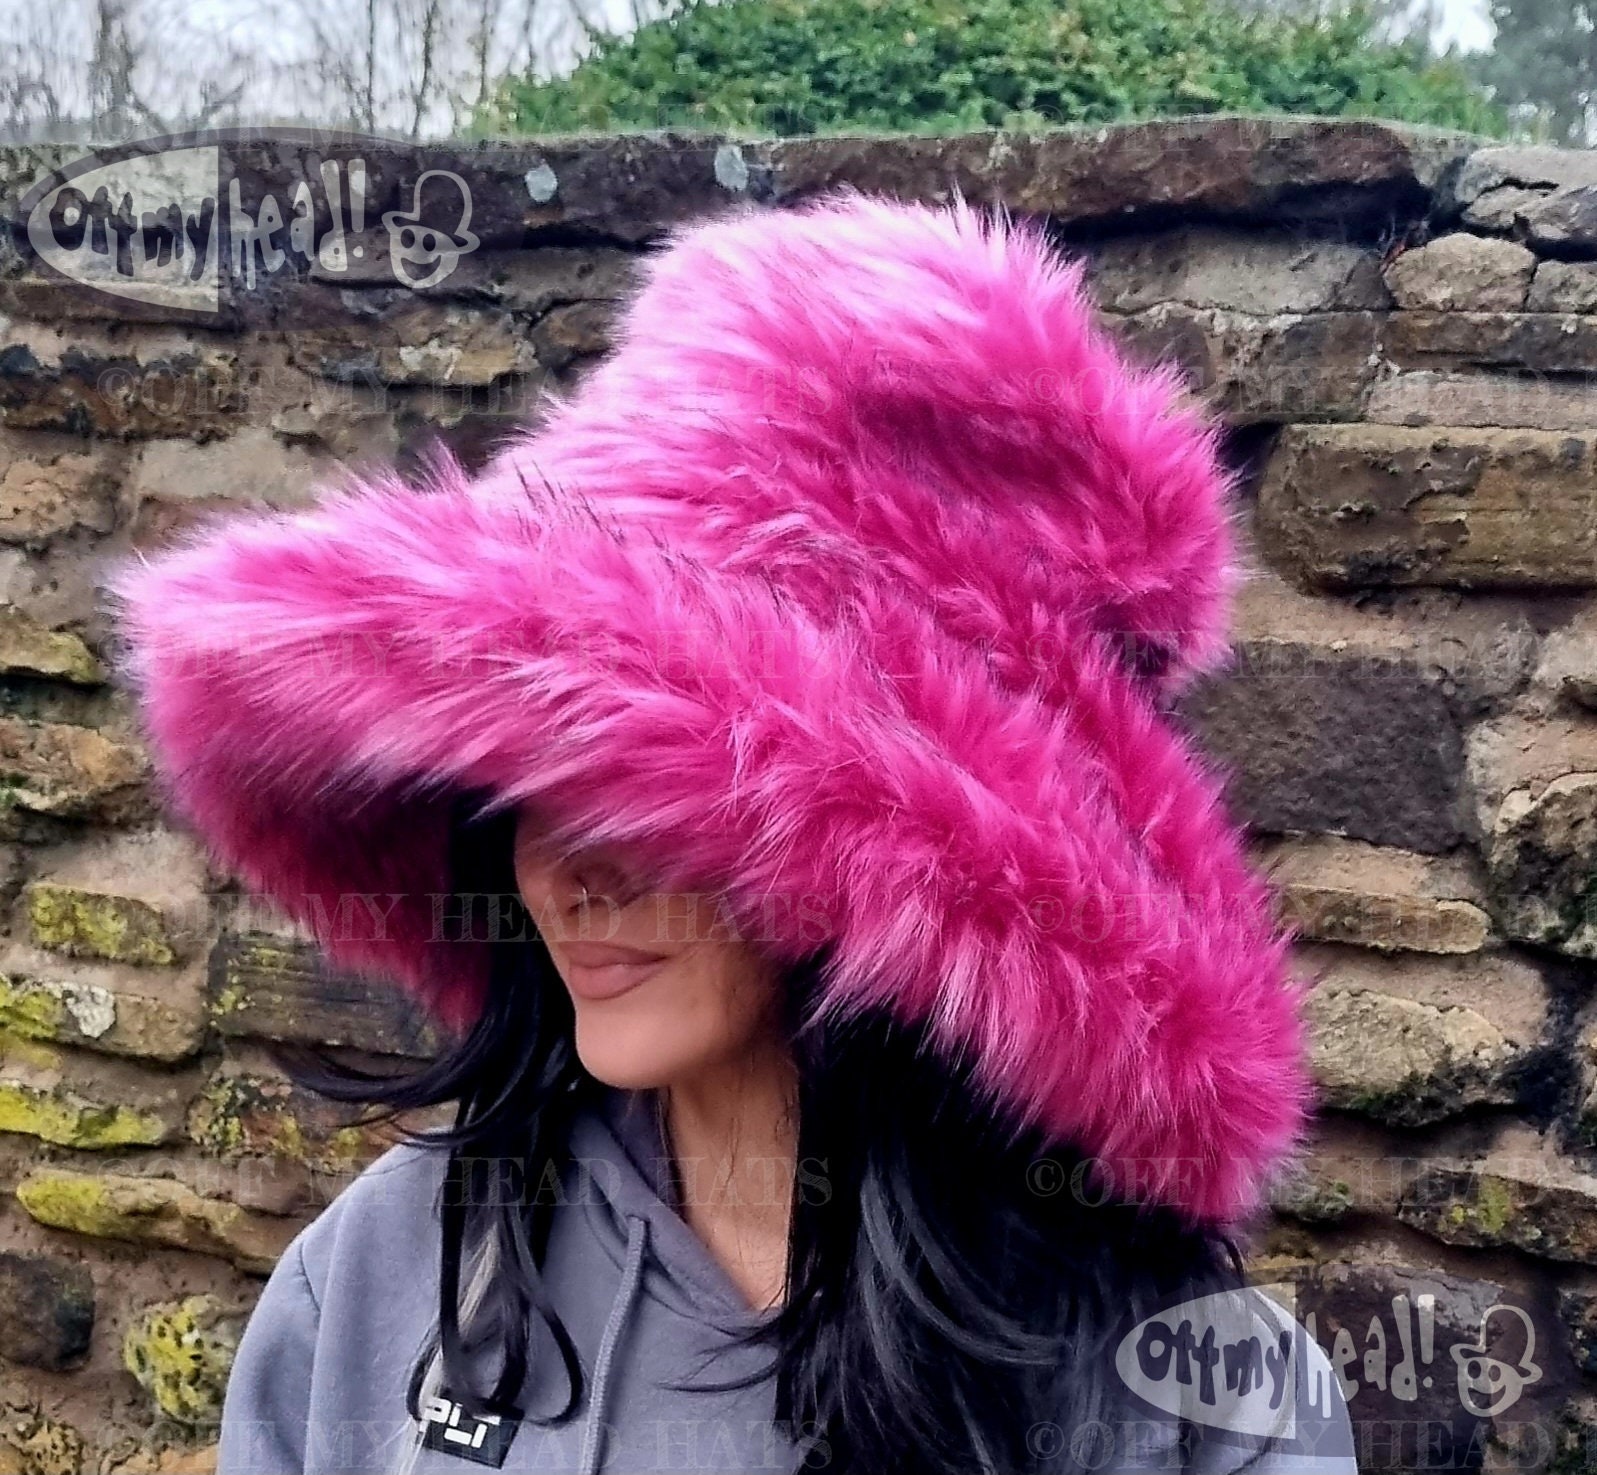 Bright Pink Faux Fur Bucket Hat, Accessories